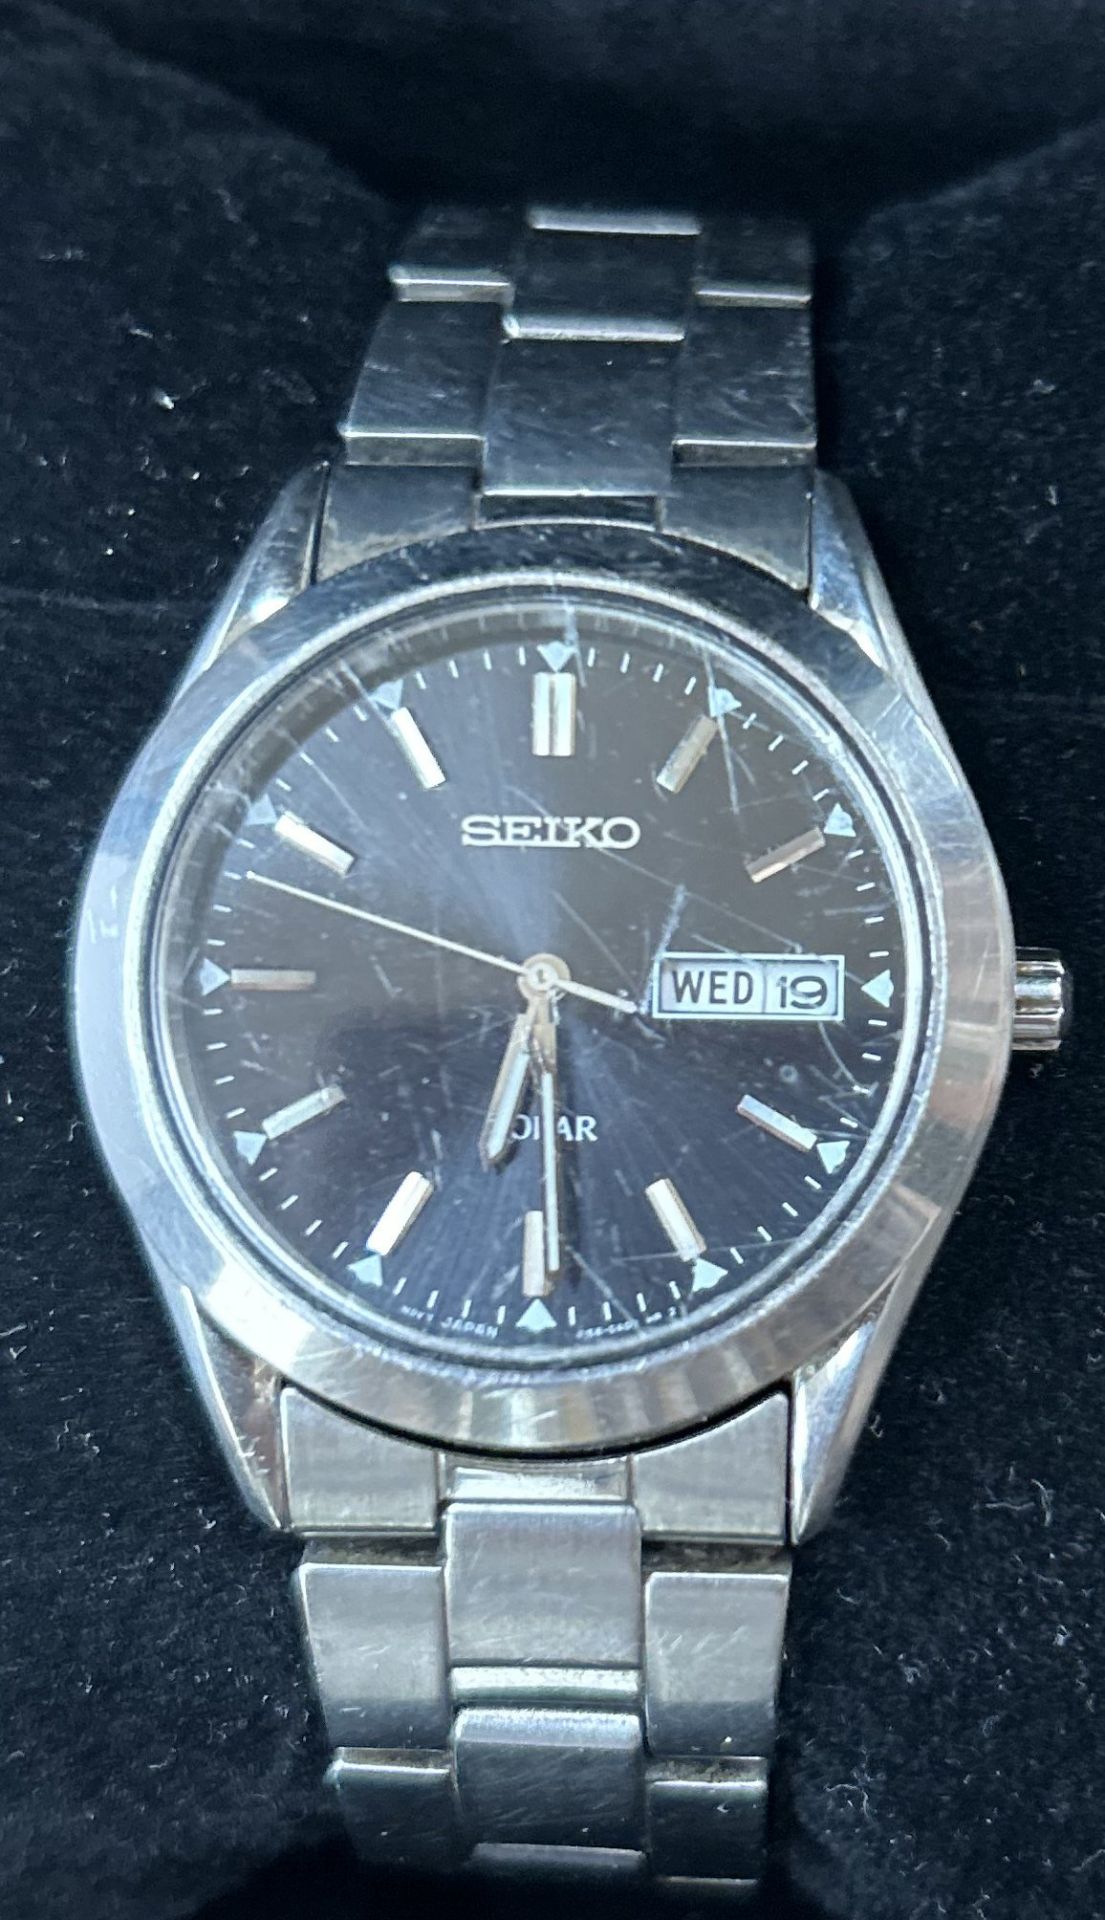 Solar Uhr "Seiko" in orig. Karton, Nr. 344739, V-1580AB0, guter Zustand, orig. Stahlband, Werk läu - Image 2 of 5